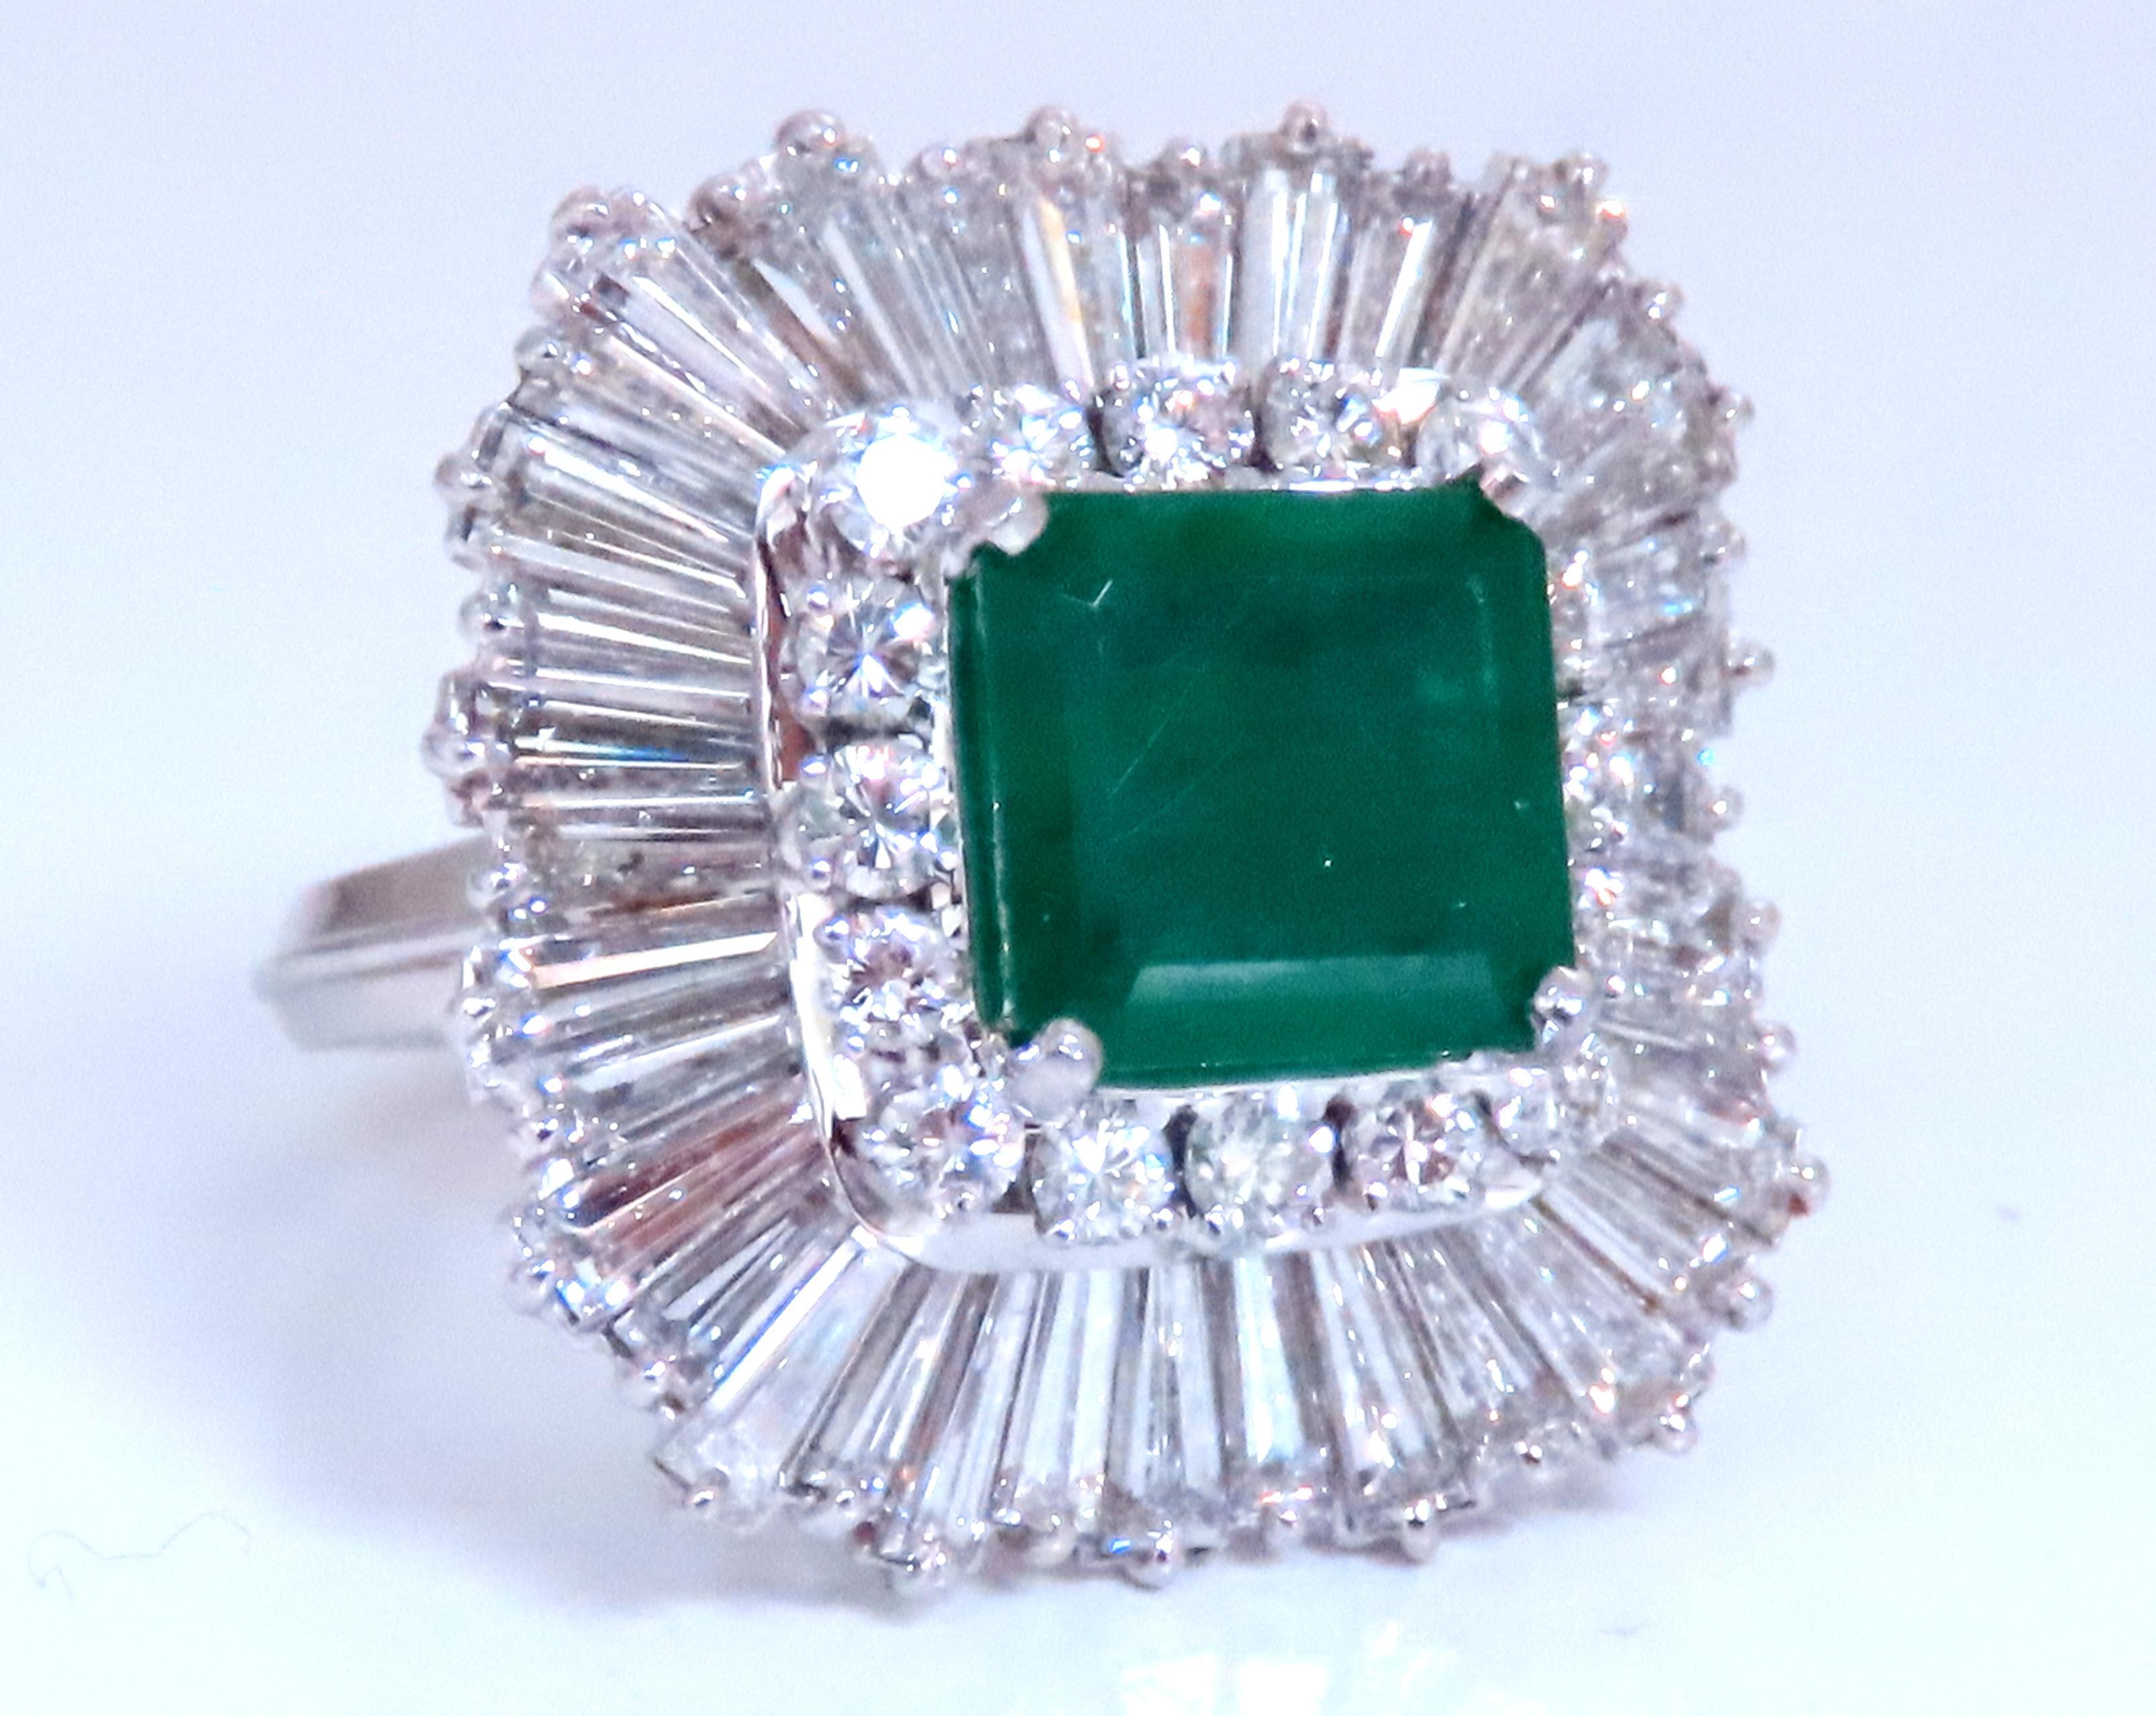 Natural Diamonds Ballerina Cocktail Cluster Ring
3.50ct Natural Emerald
Emerald cut, 8.6 x 8.4mm
Transparent
4ct Diamonds, Baguette & Rounds
G-H-I color Vs-2 S-1 clarity
Platinum
12.9 grams
21 x 21mm deck
13.3mm depth
Size 6.5
$20,000 Appraisal to